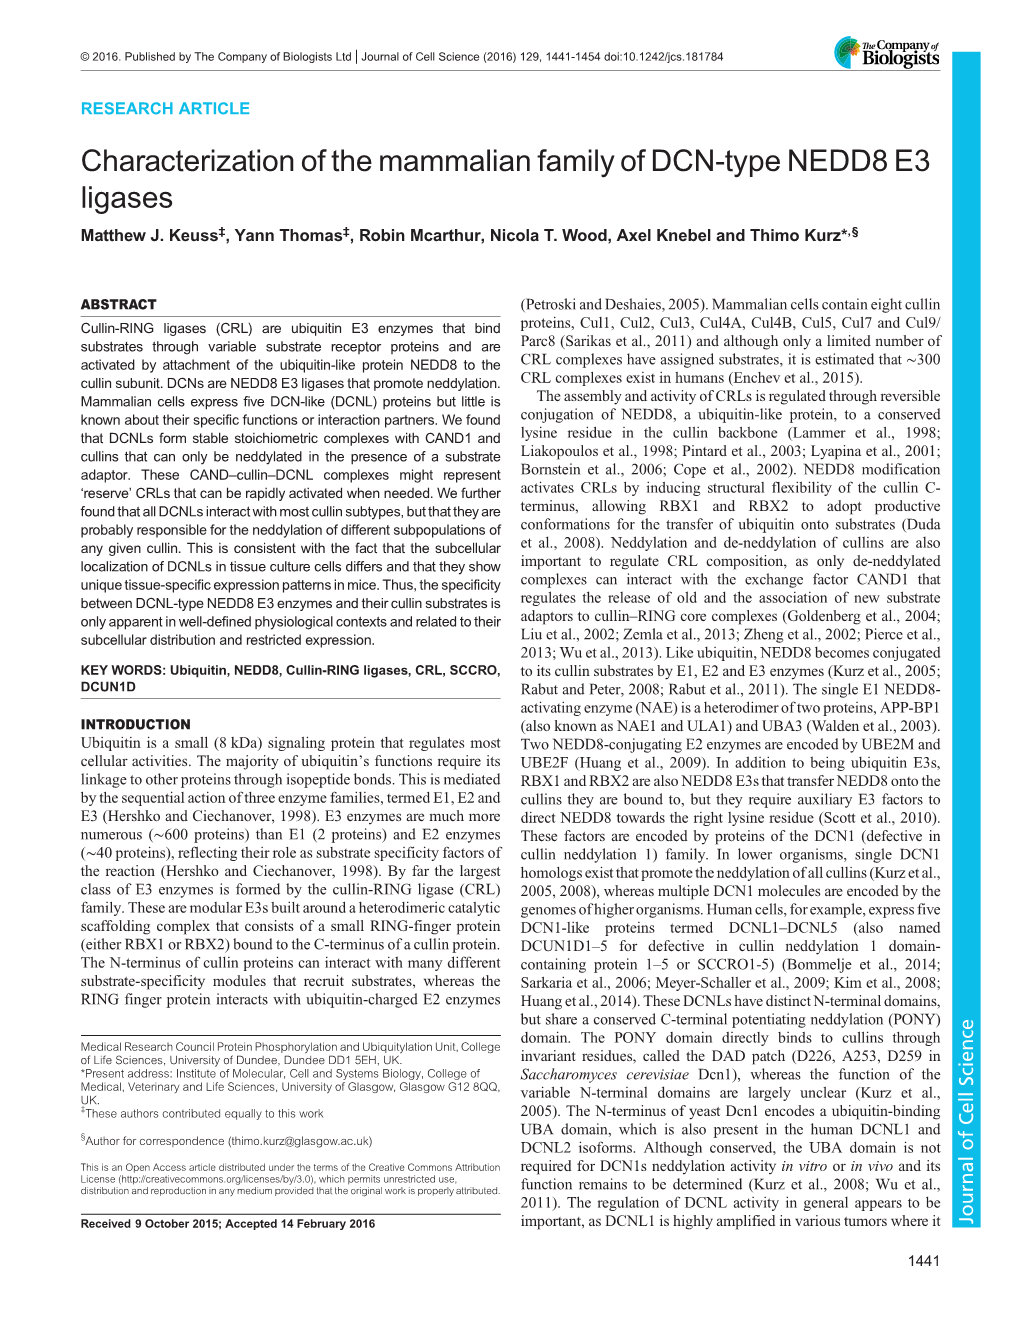 Characterization of the Mammalian Family of DCN-Type NEDD8 E3 Ligases Matthew J